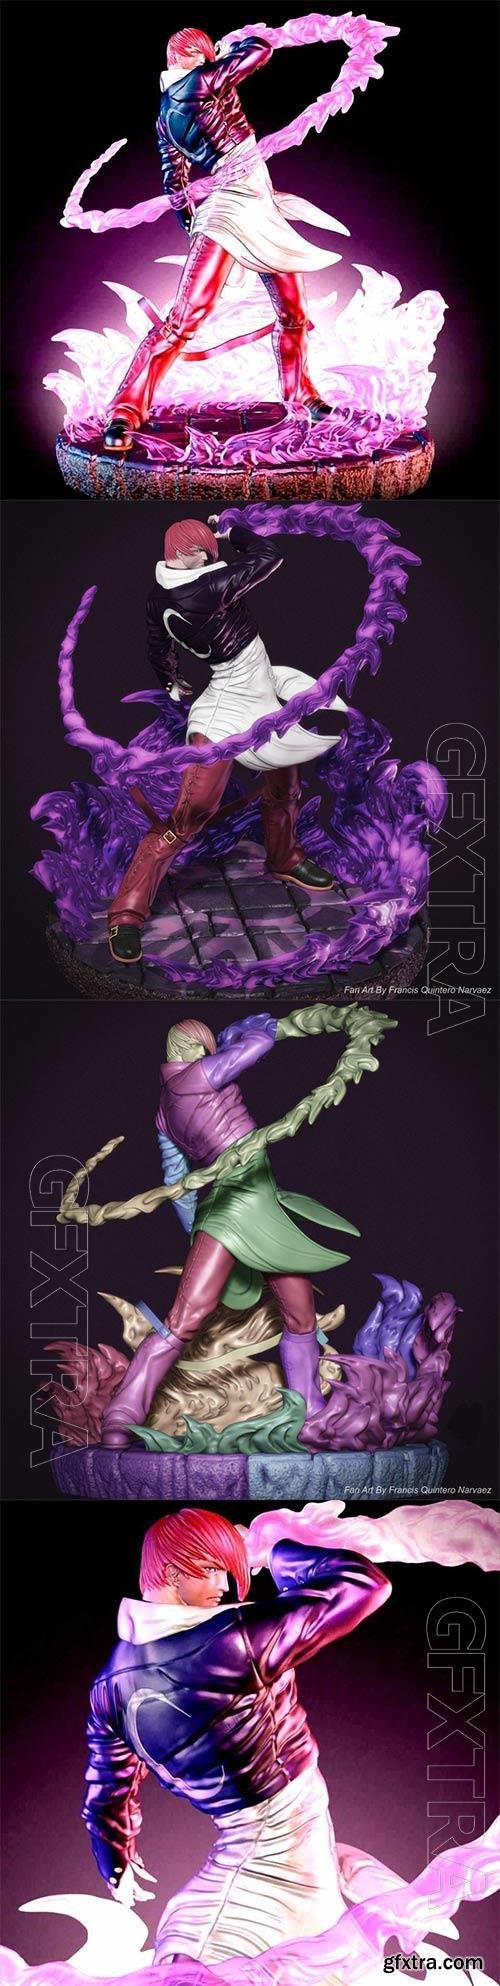 Iori Yagami - King of Fighters 3D Print Model 